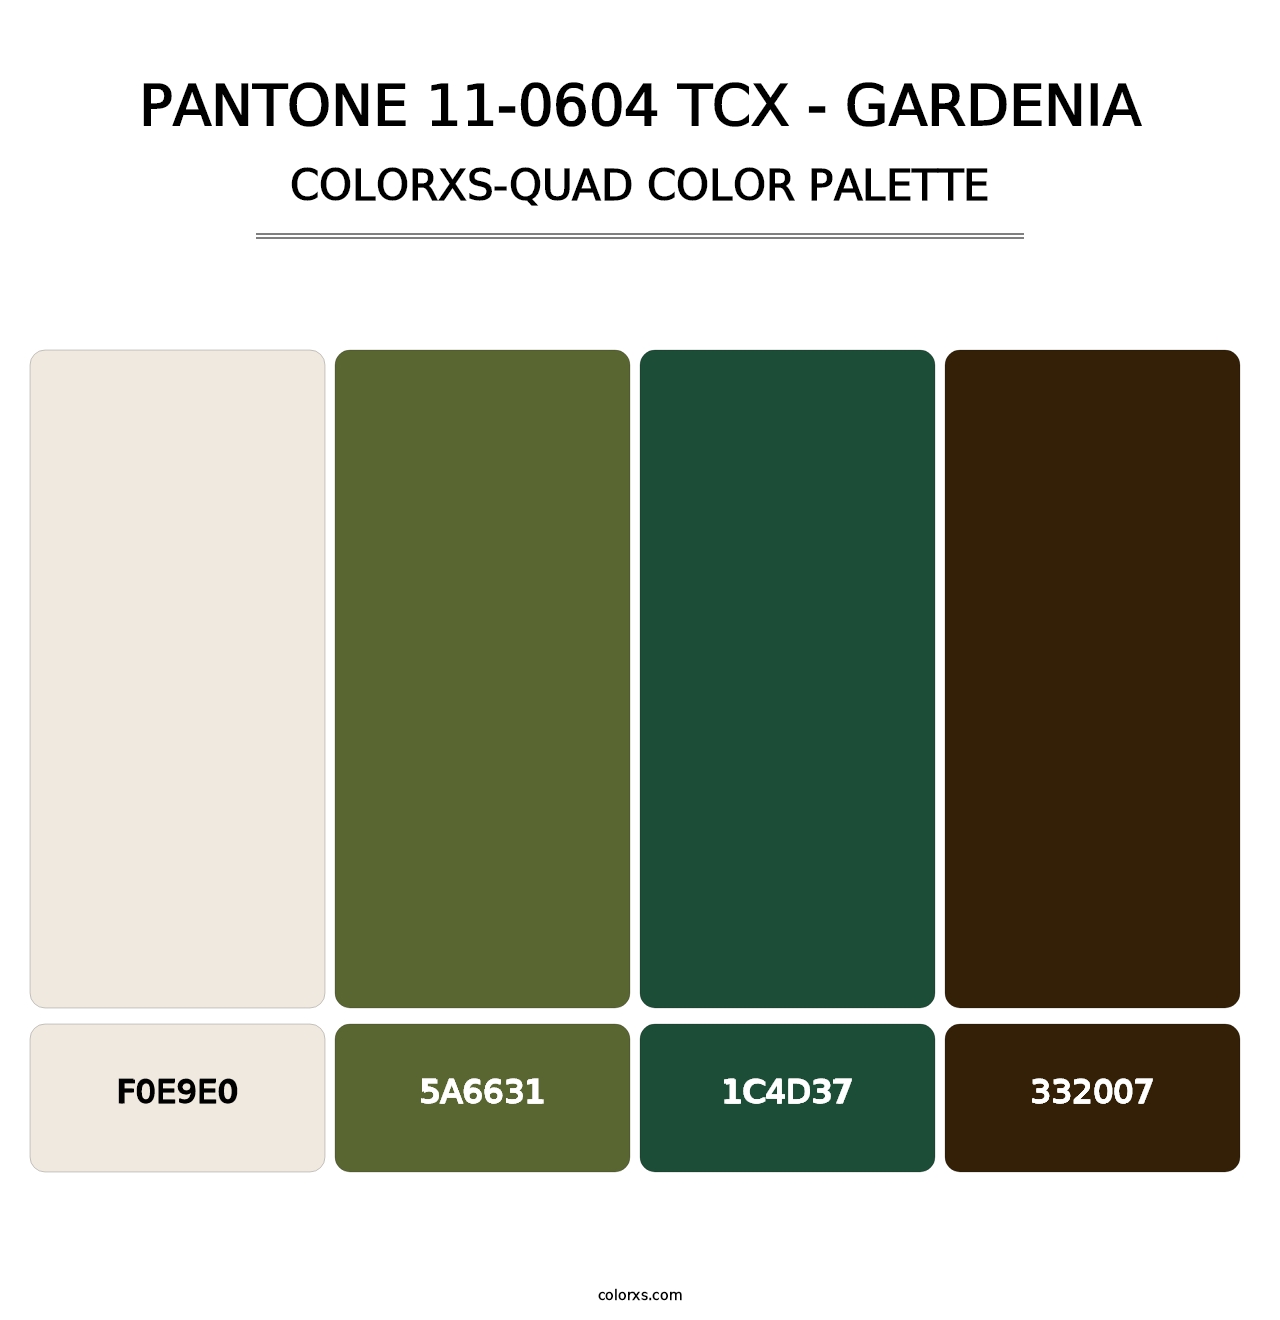 PANTONE 11-0604 TCX - Gardenia - Colorxs Quad Palette